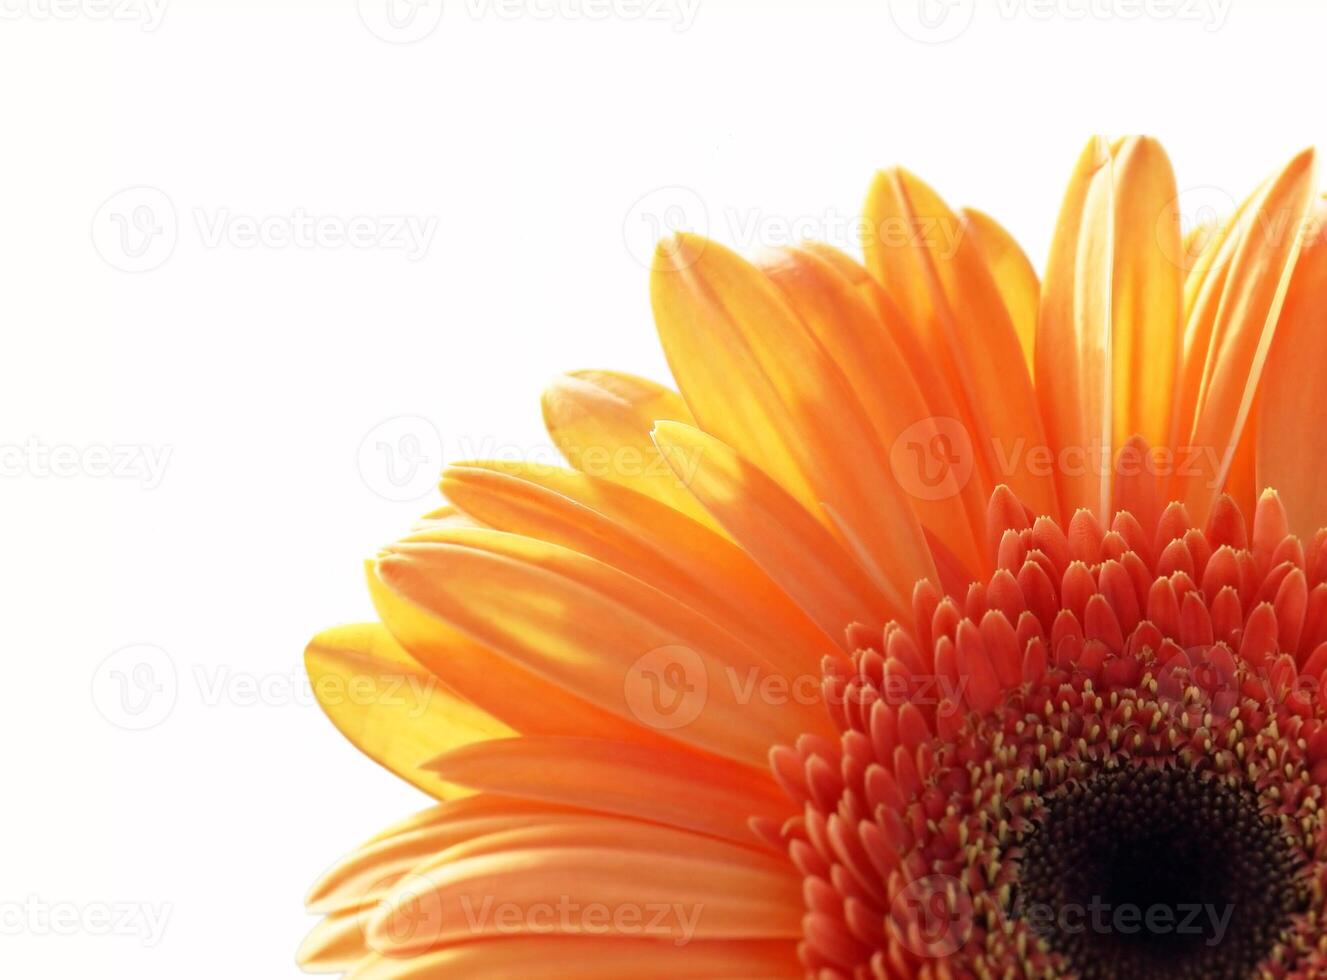 naranja gerber margarita flor en blanco antecedentes foto